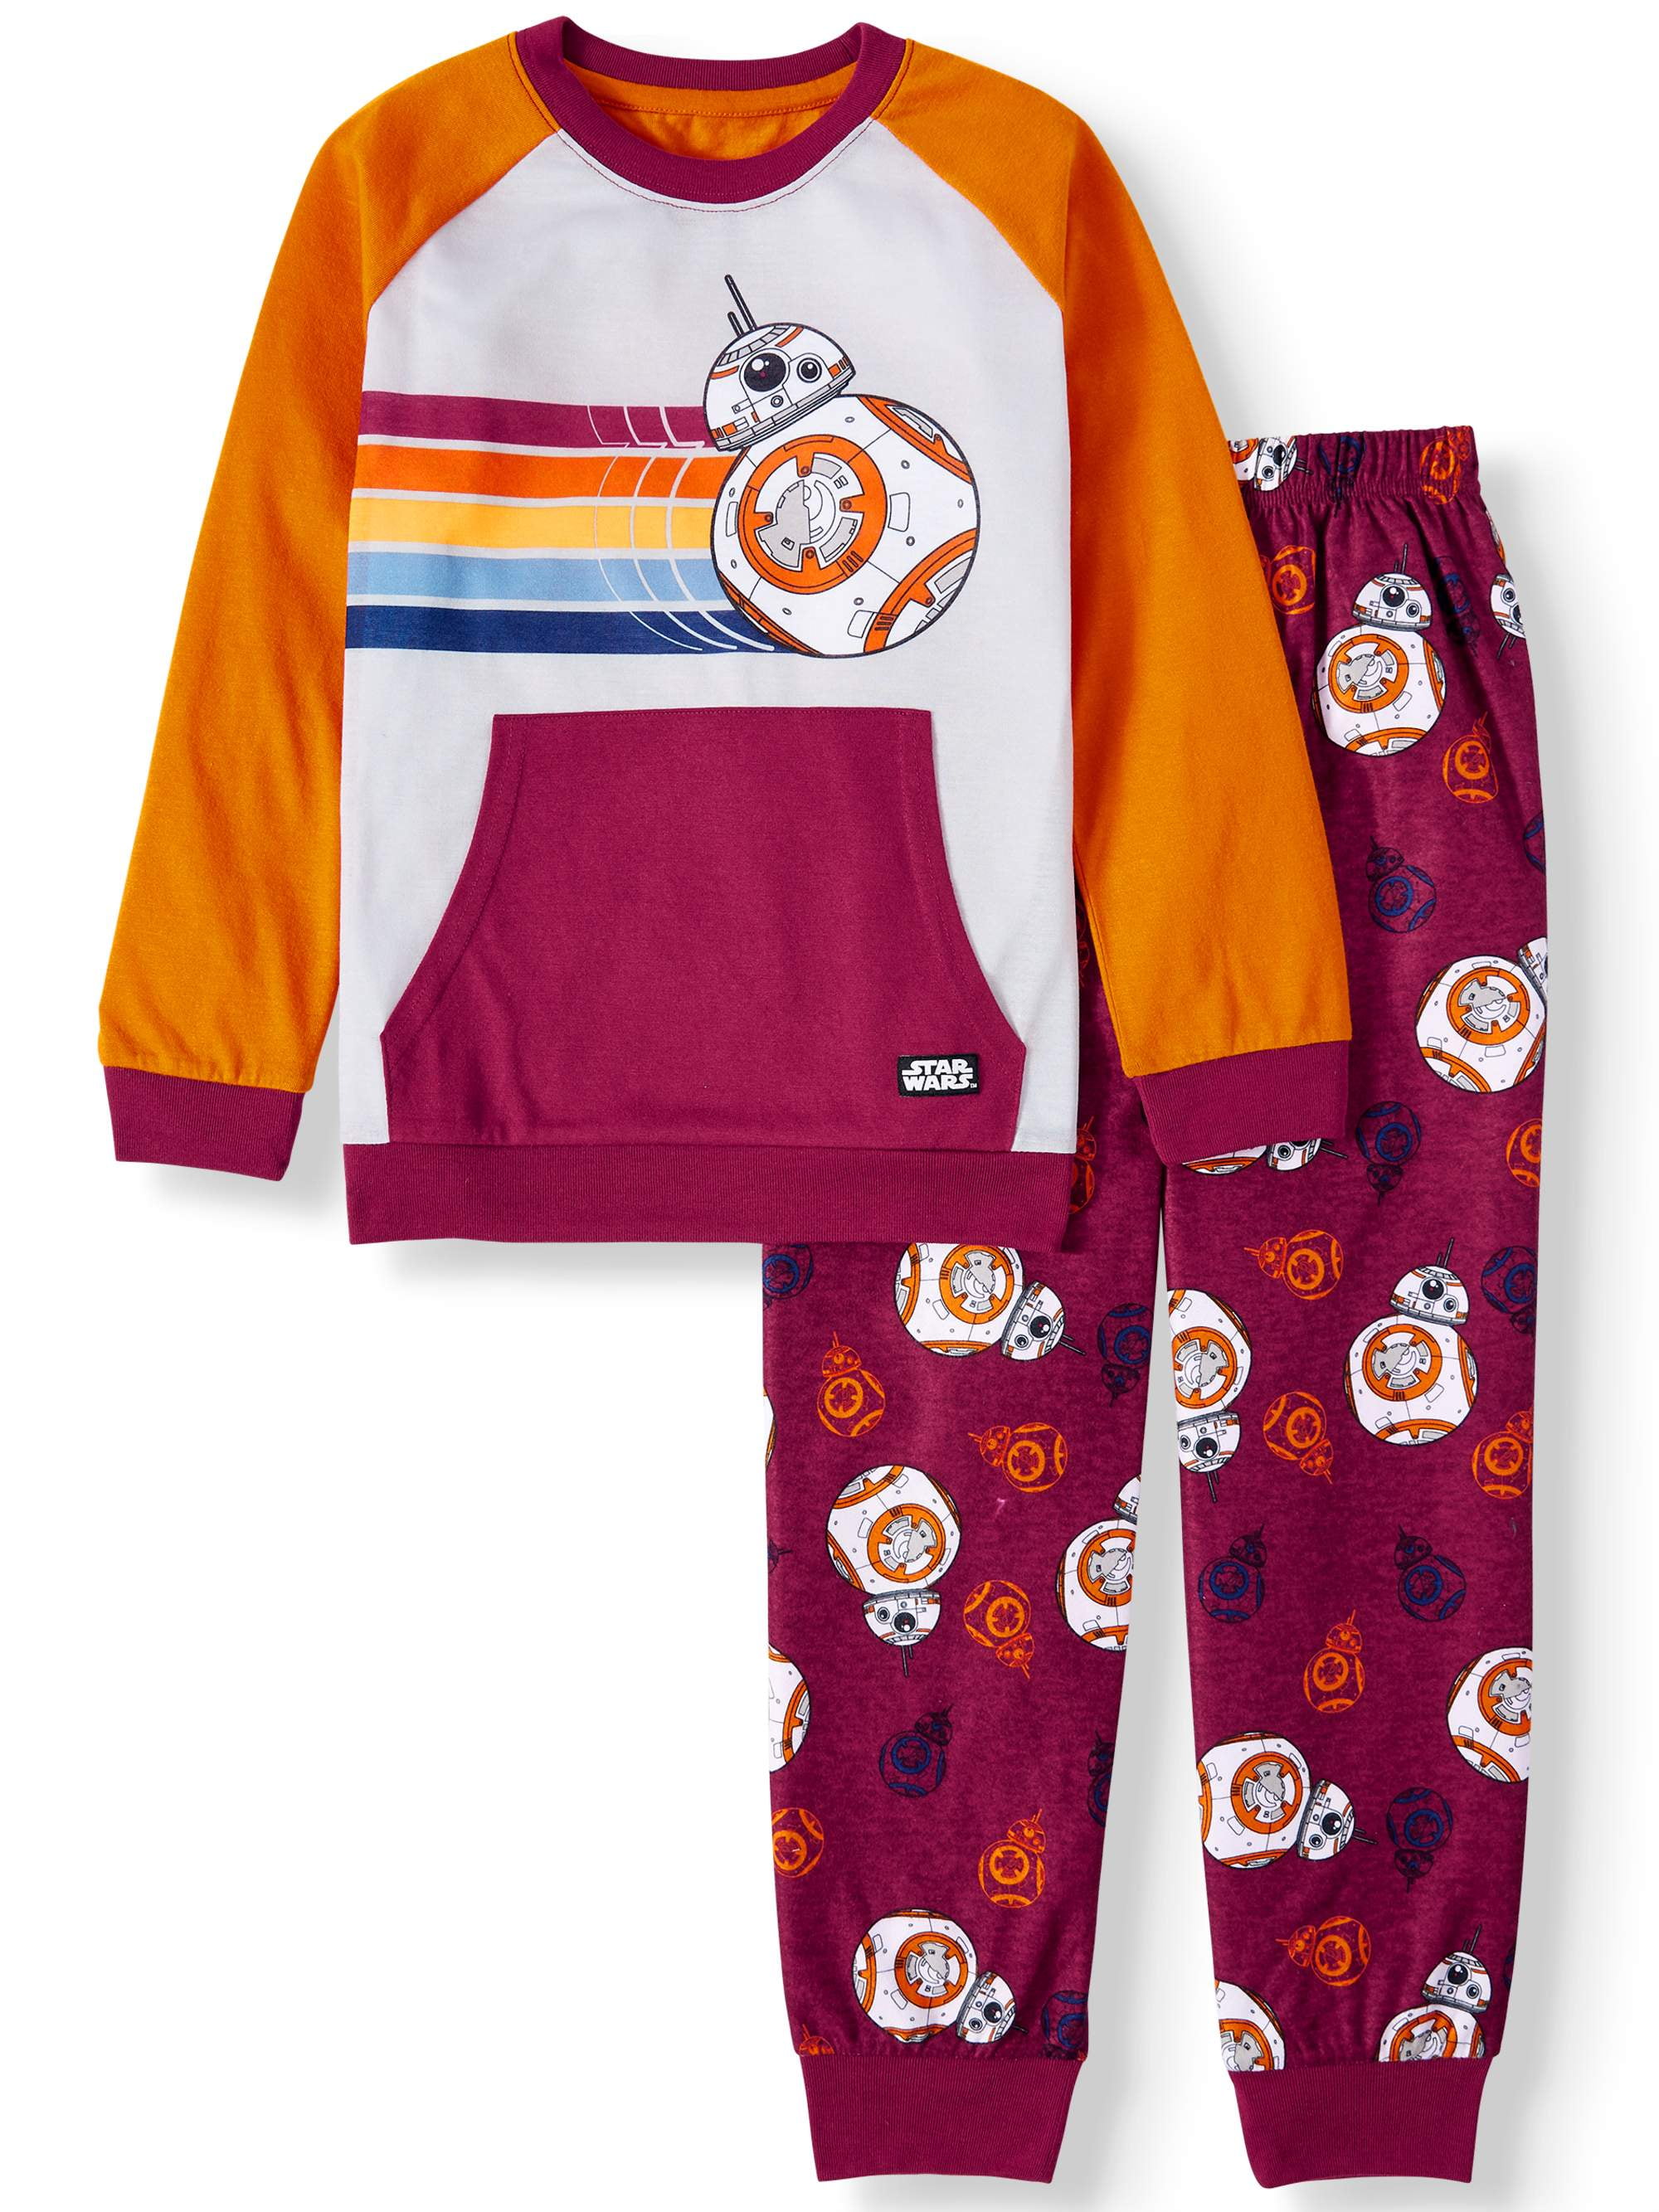 Lego Star Wars Little/Big Boys Two-Piece Pajama Pant Set Size 4/5 6/7 8 10/12 